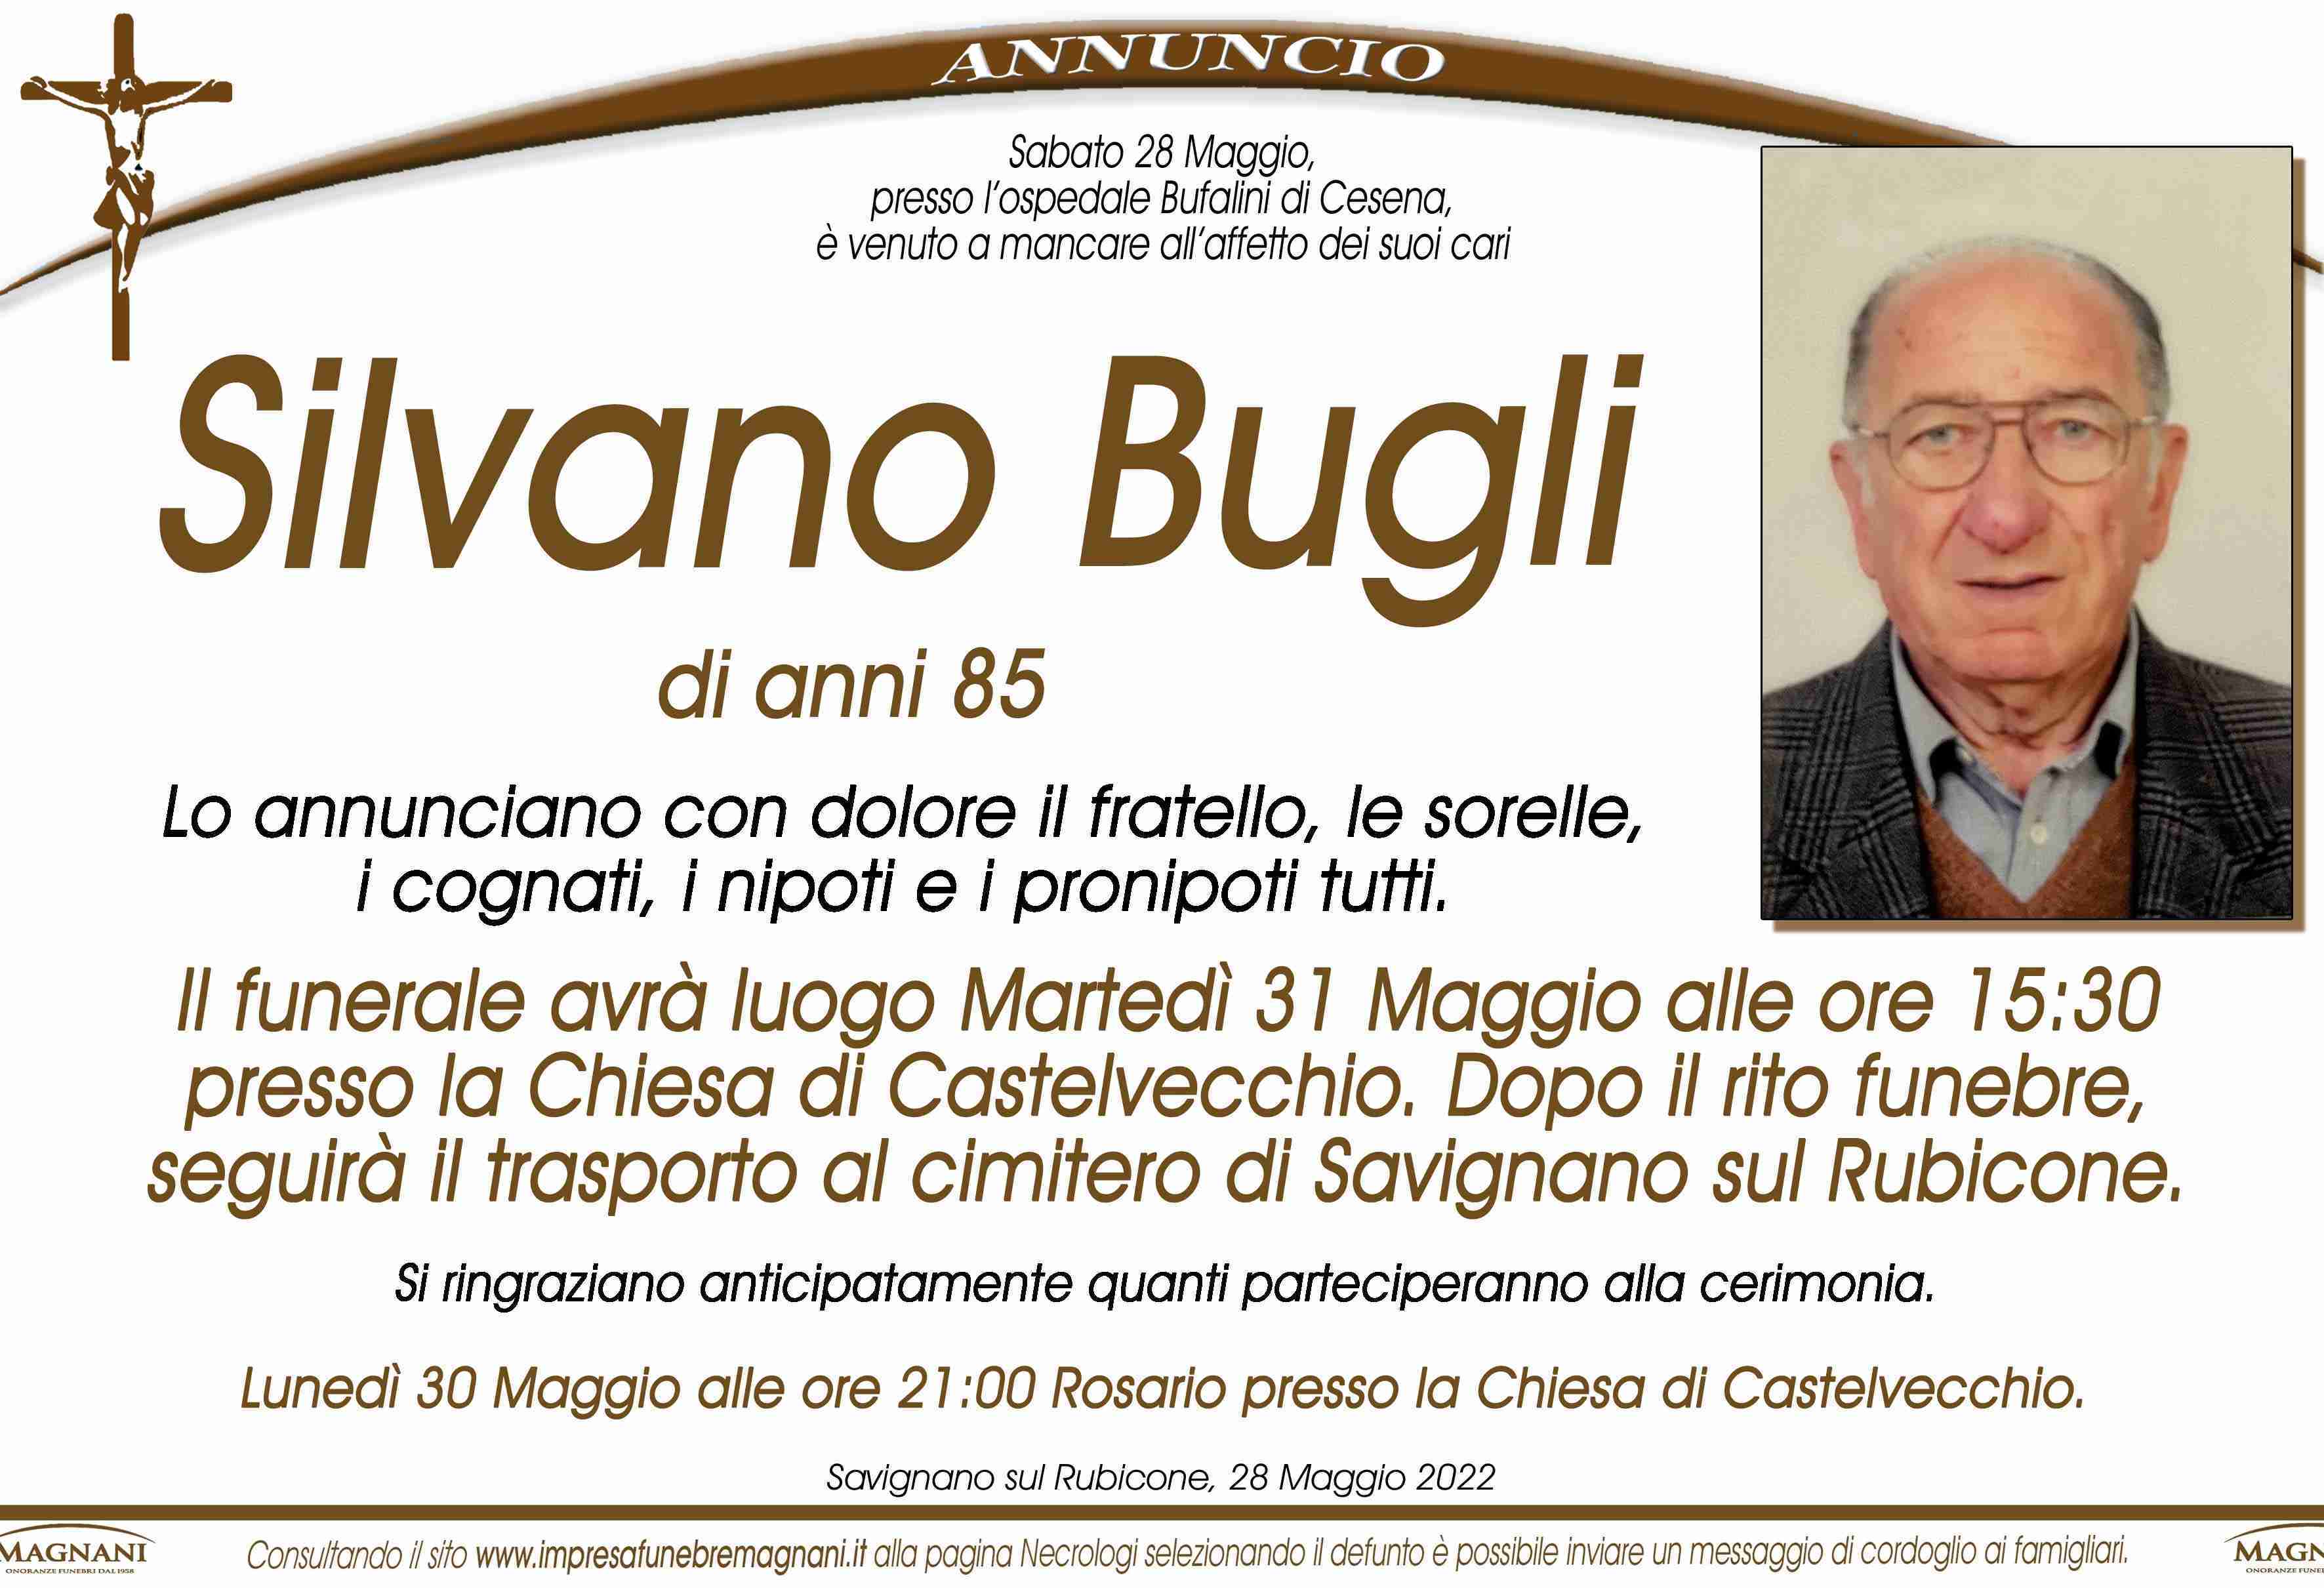 Silvano Bugli